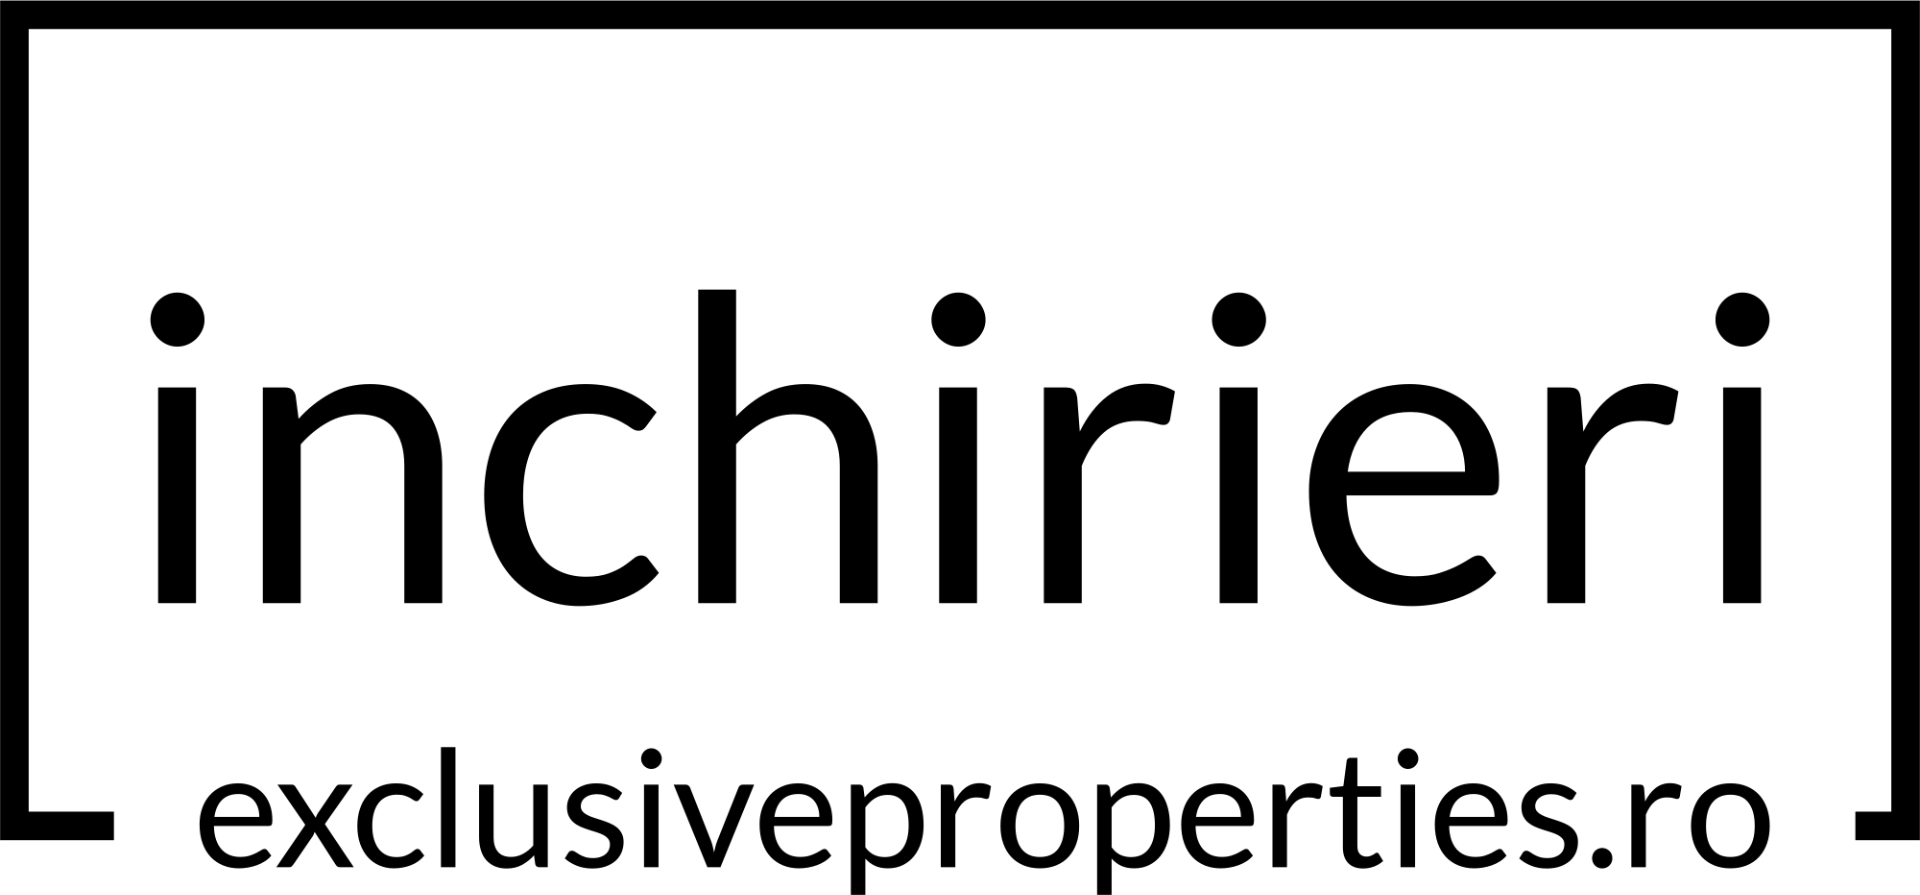 inchirieri-high-resolution-logo-black-transparent